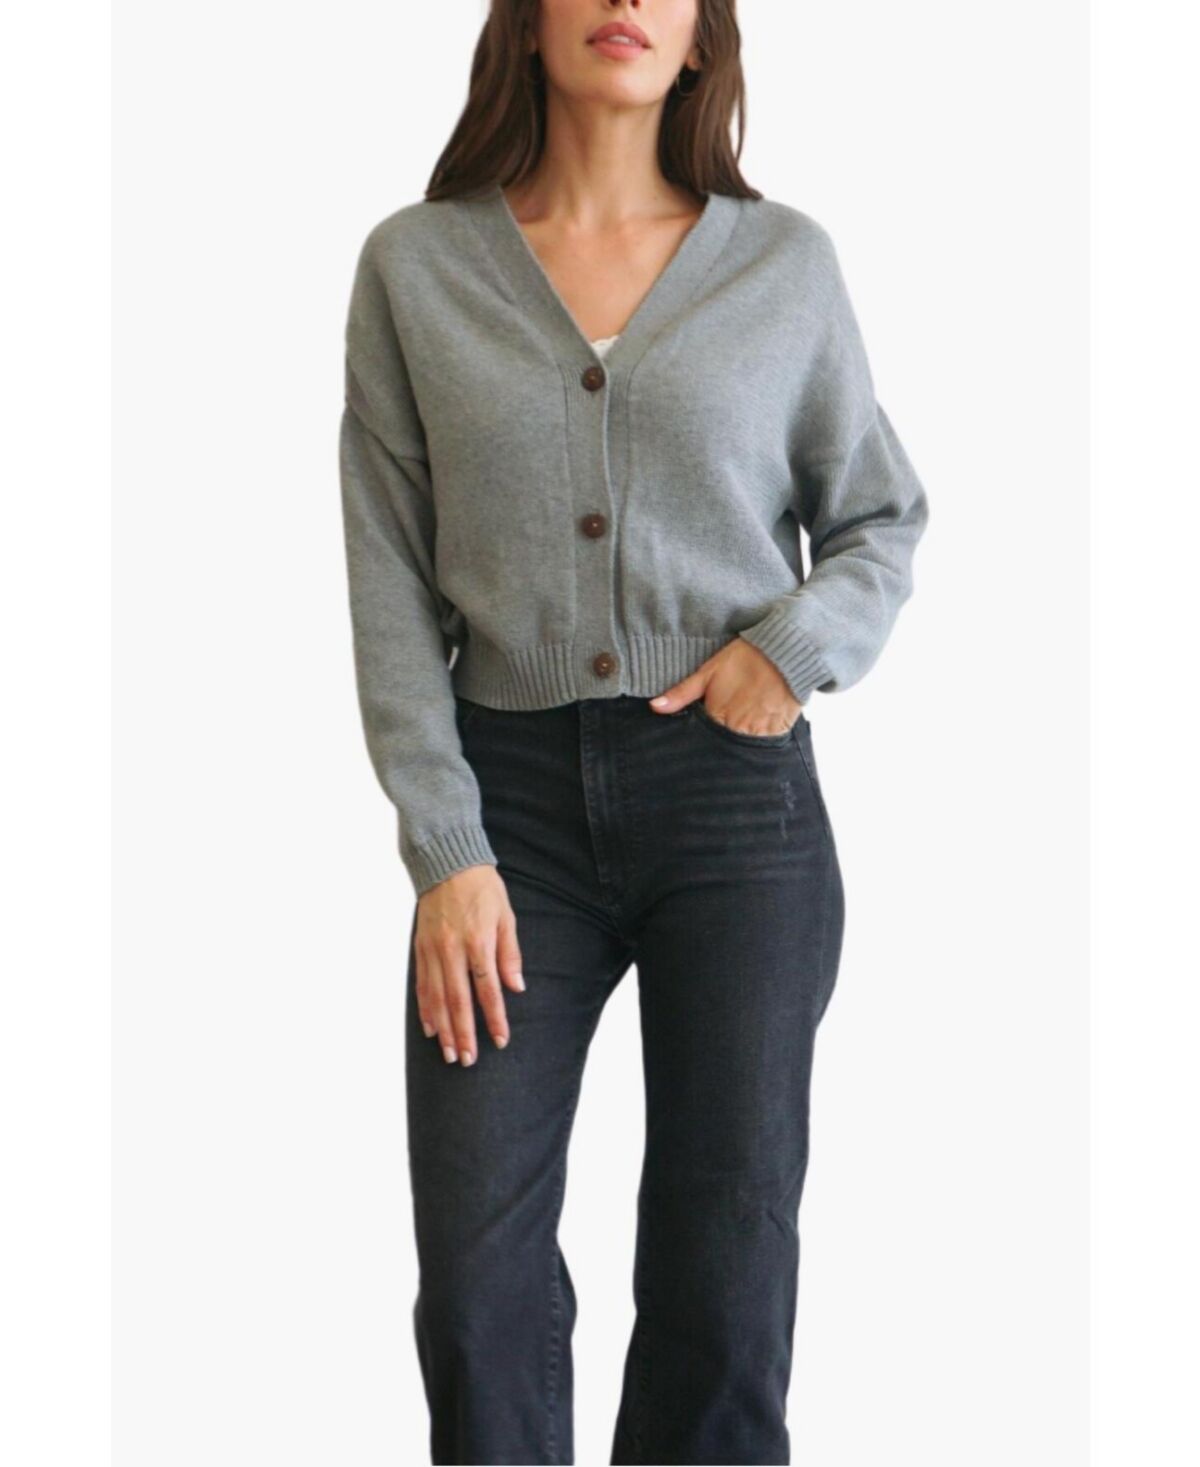 Paneros Clothing Women's Cotton Diana Crop Cardigan Sweater - Heather grey